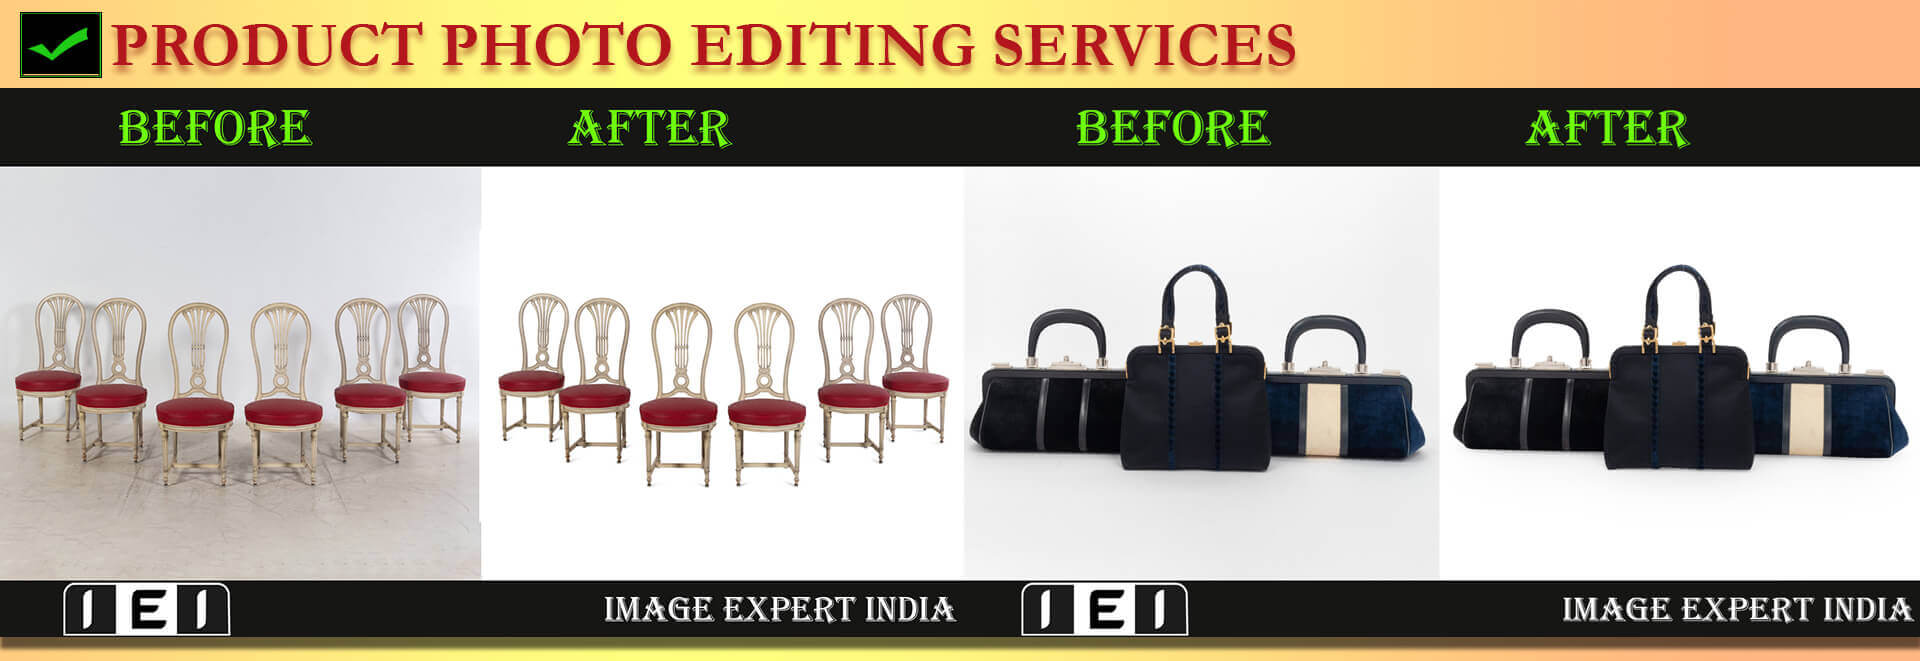 E-commerce Image Editing services Company